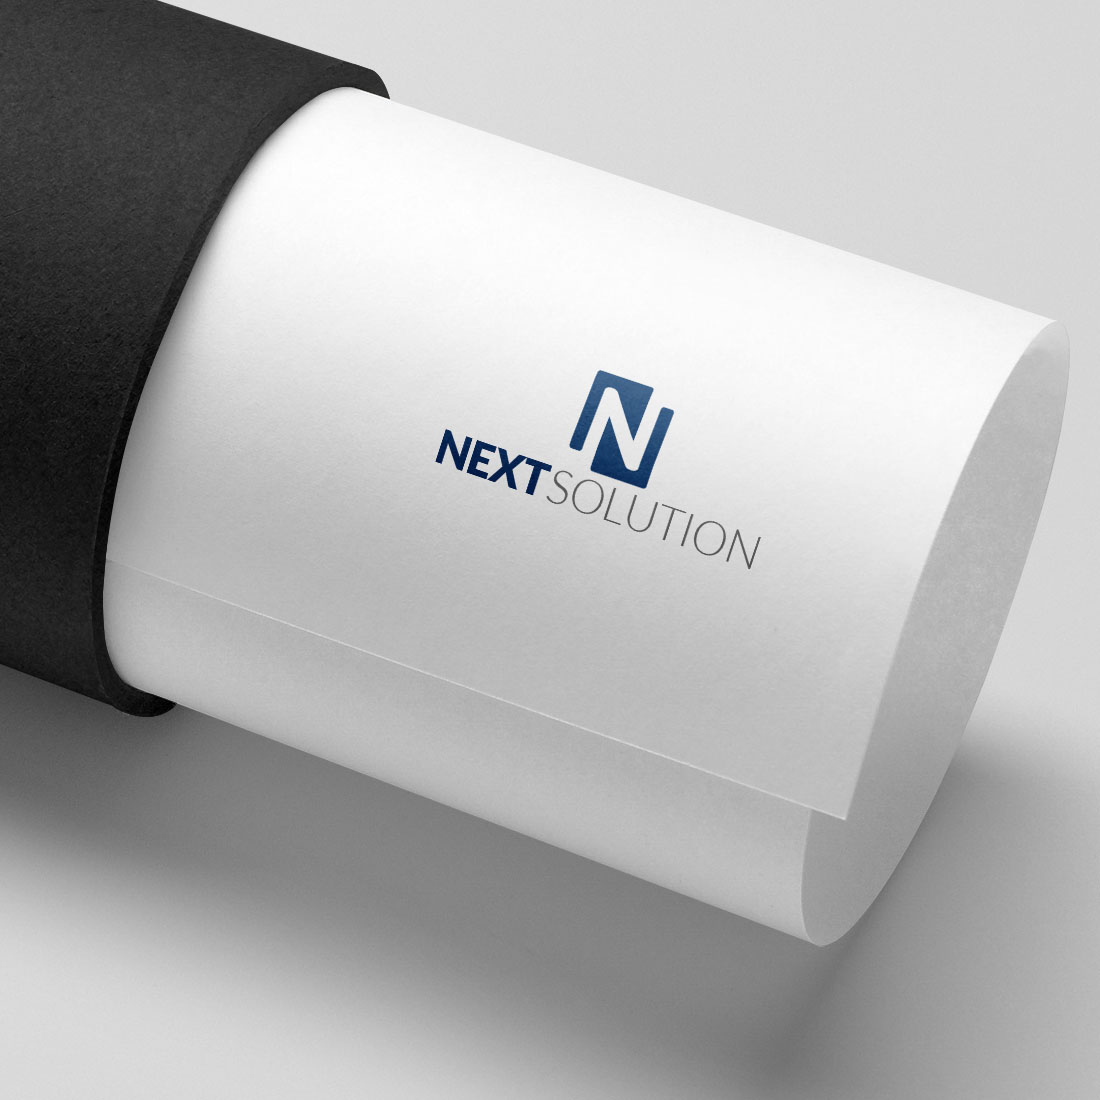 Clean Next Solution Logo Design cover image.